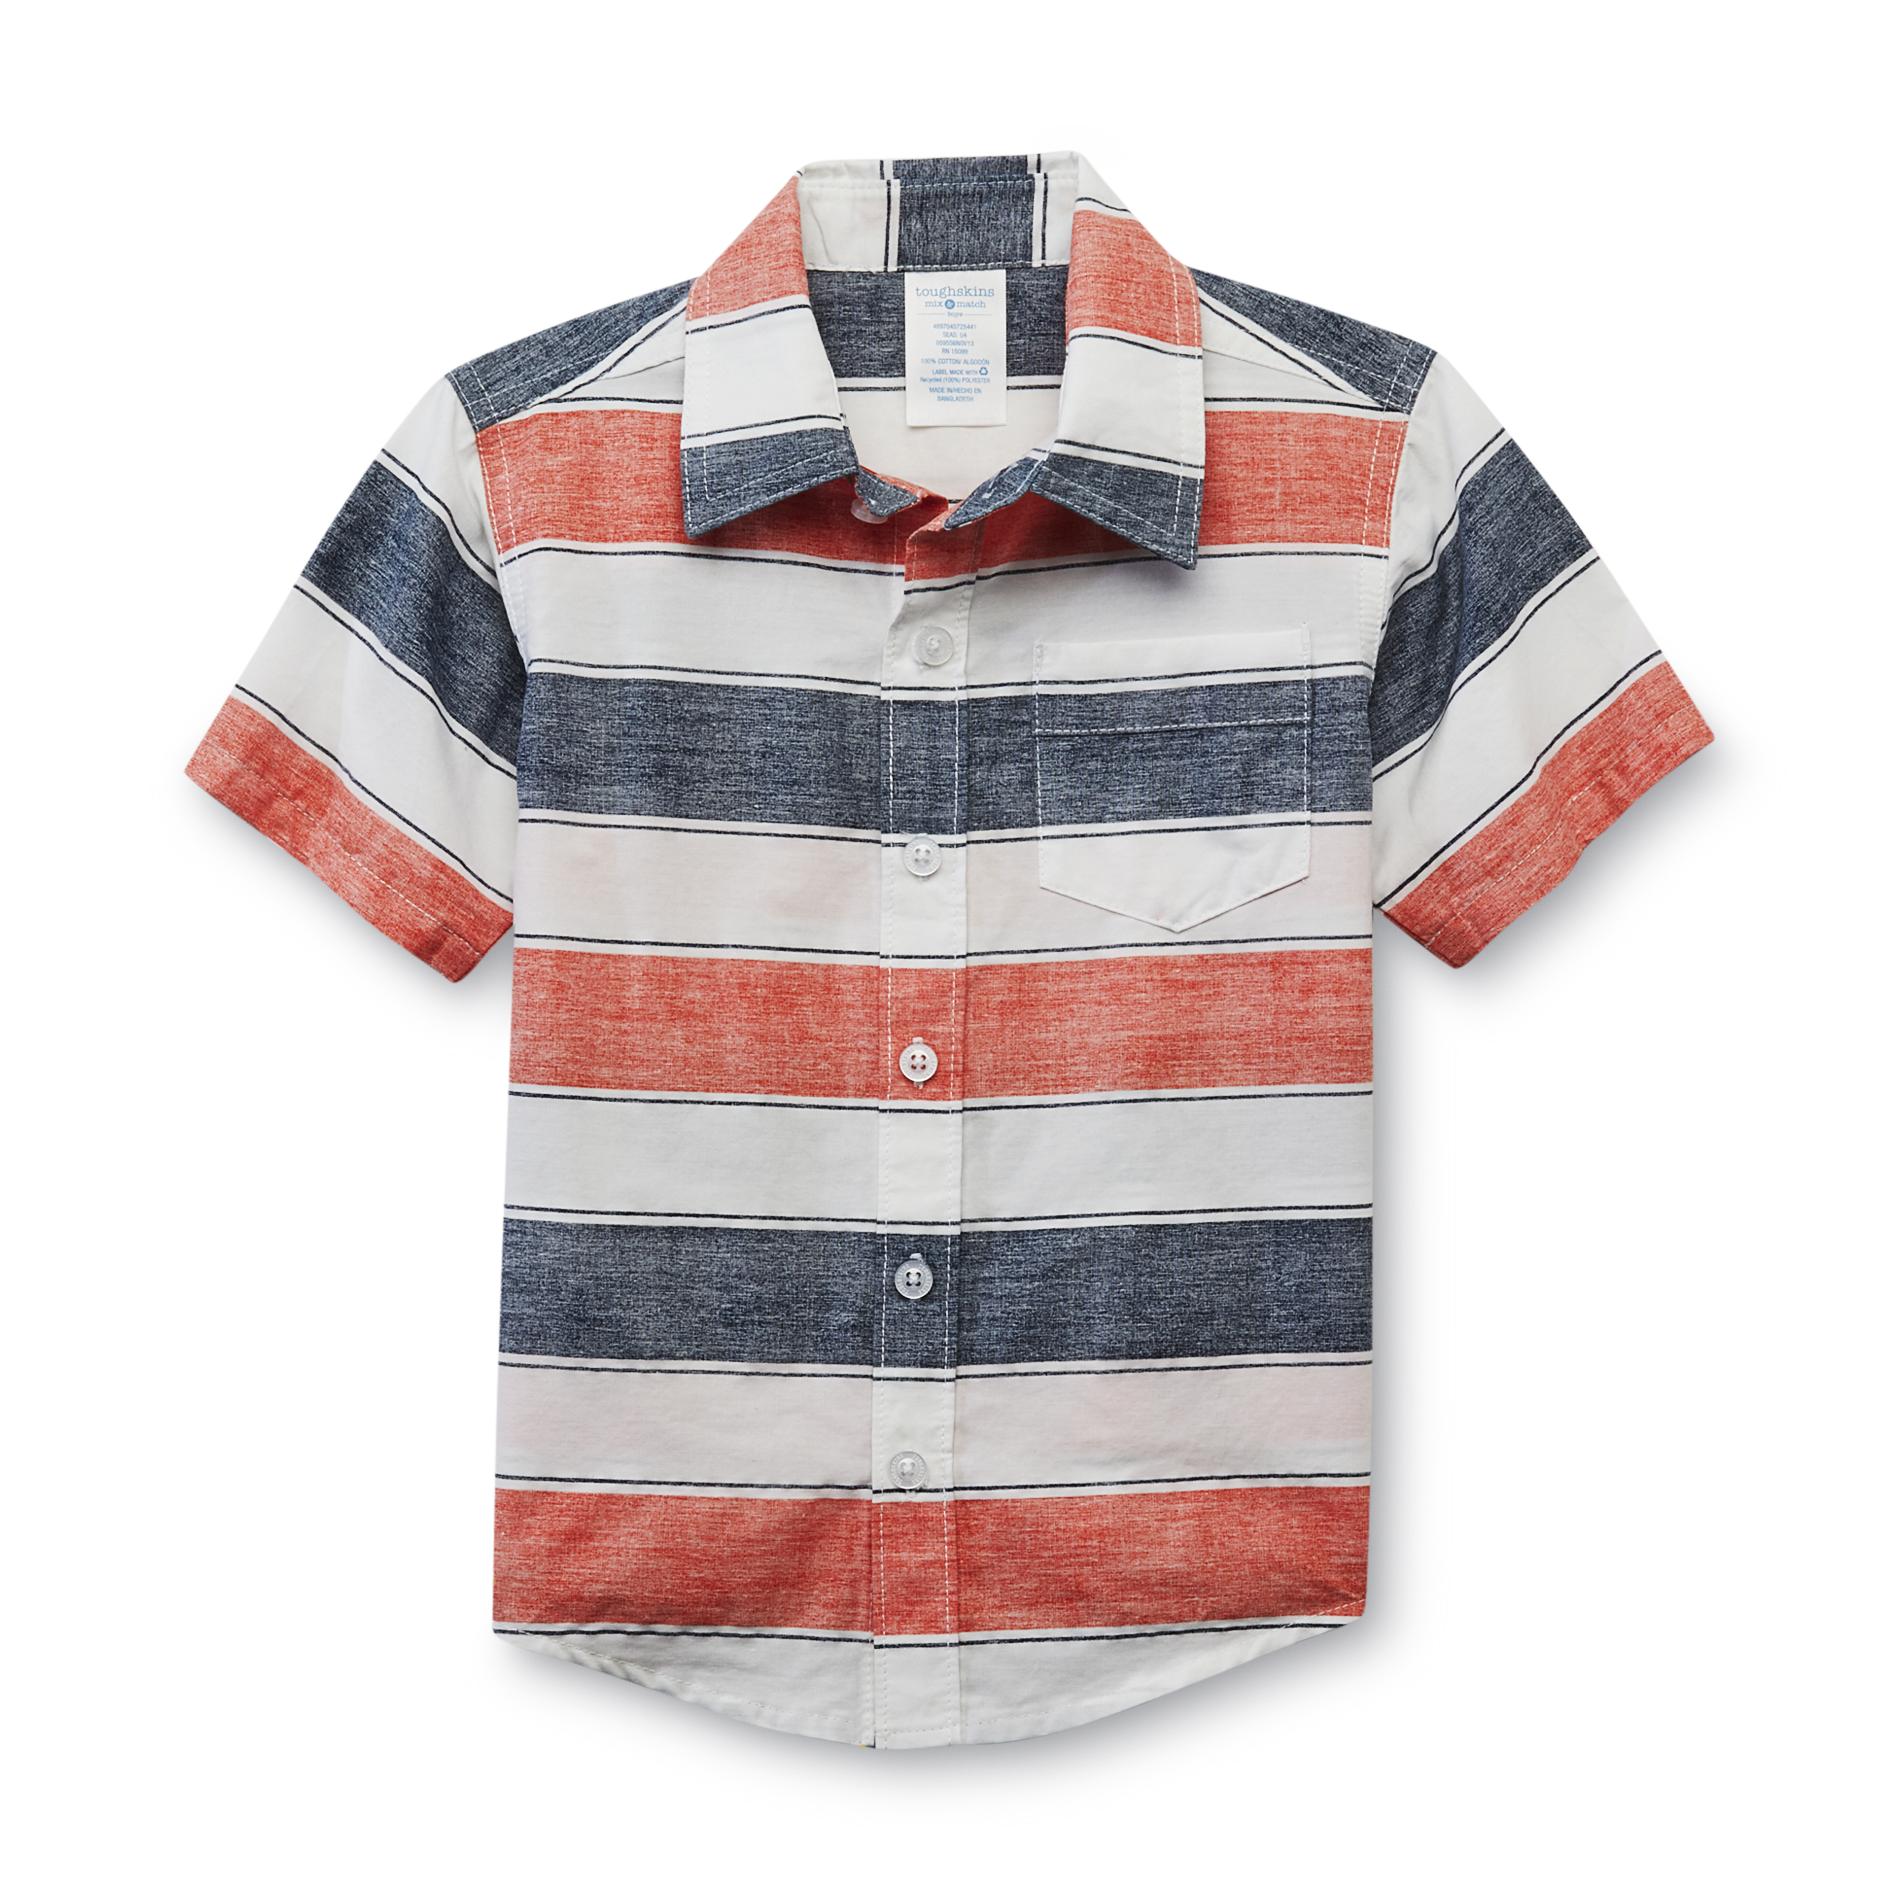 Toughskins Toddler Boy's Short-Sleeve Shirt - Striped